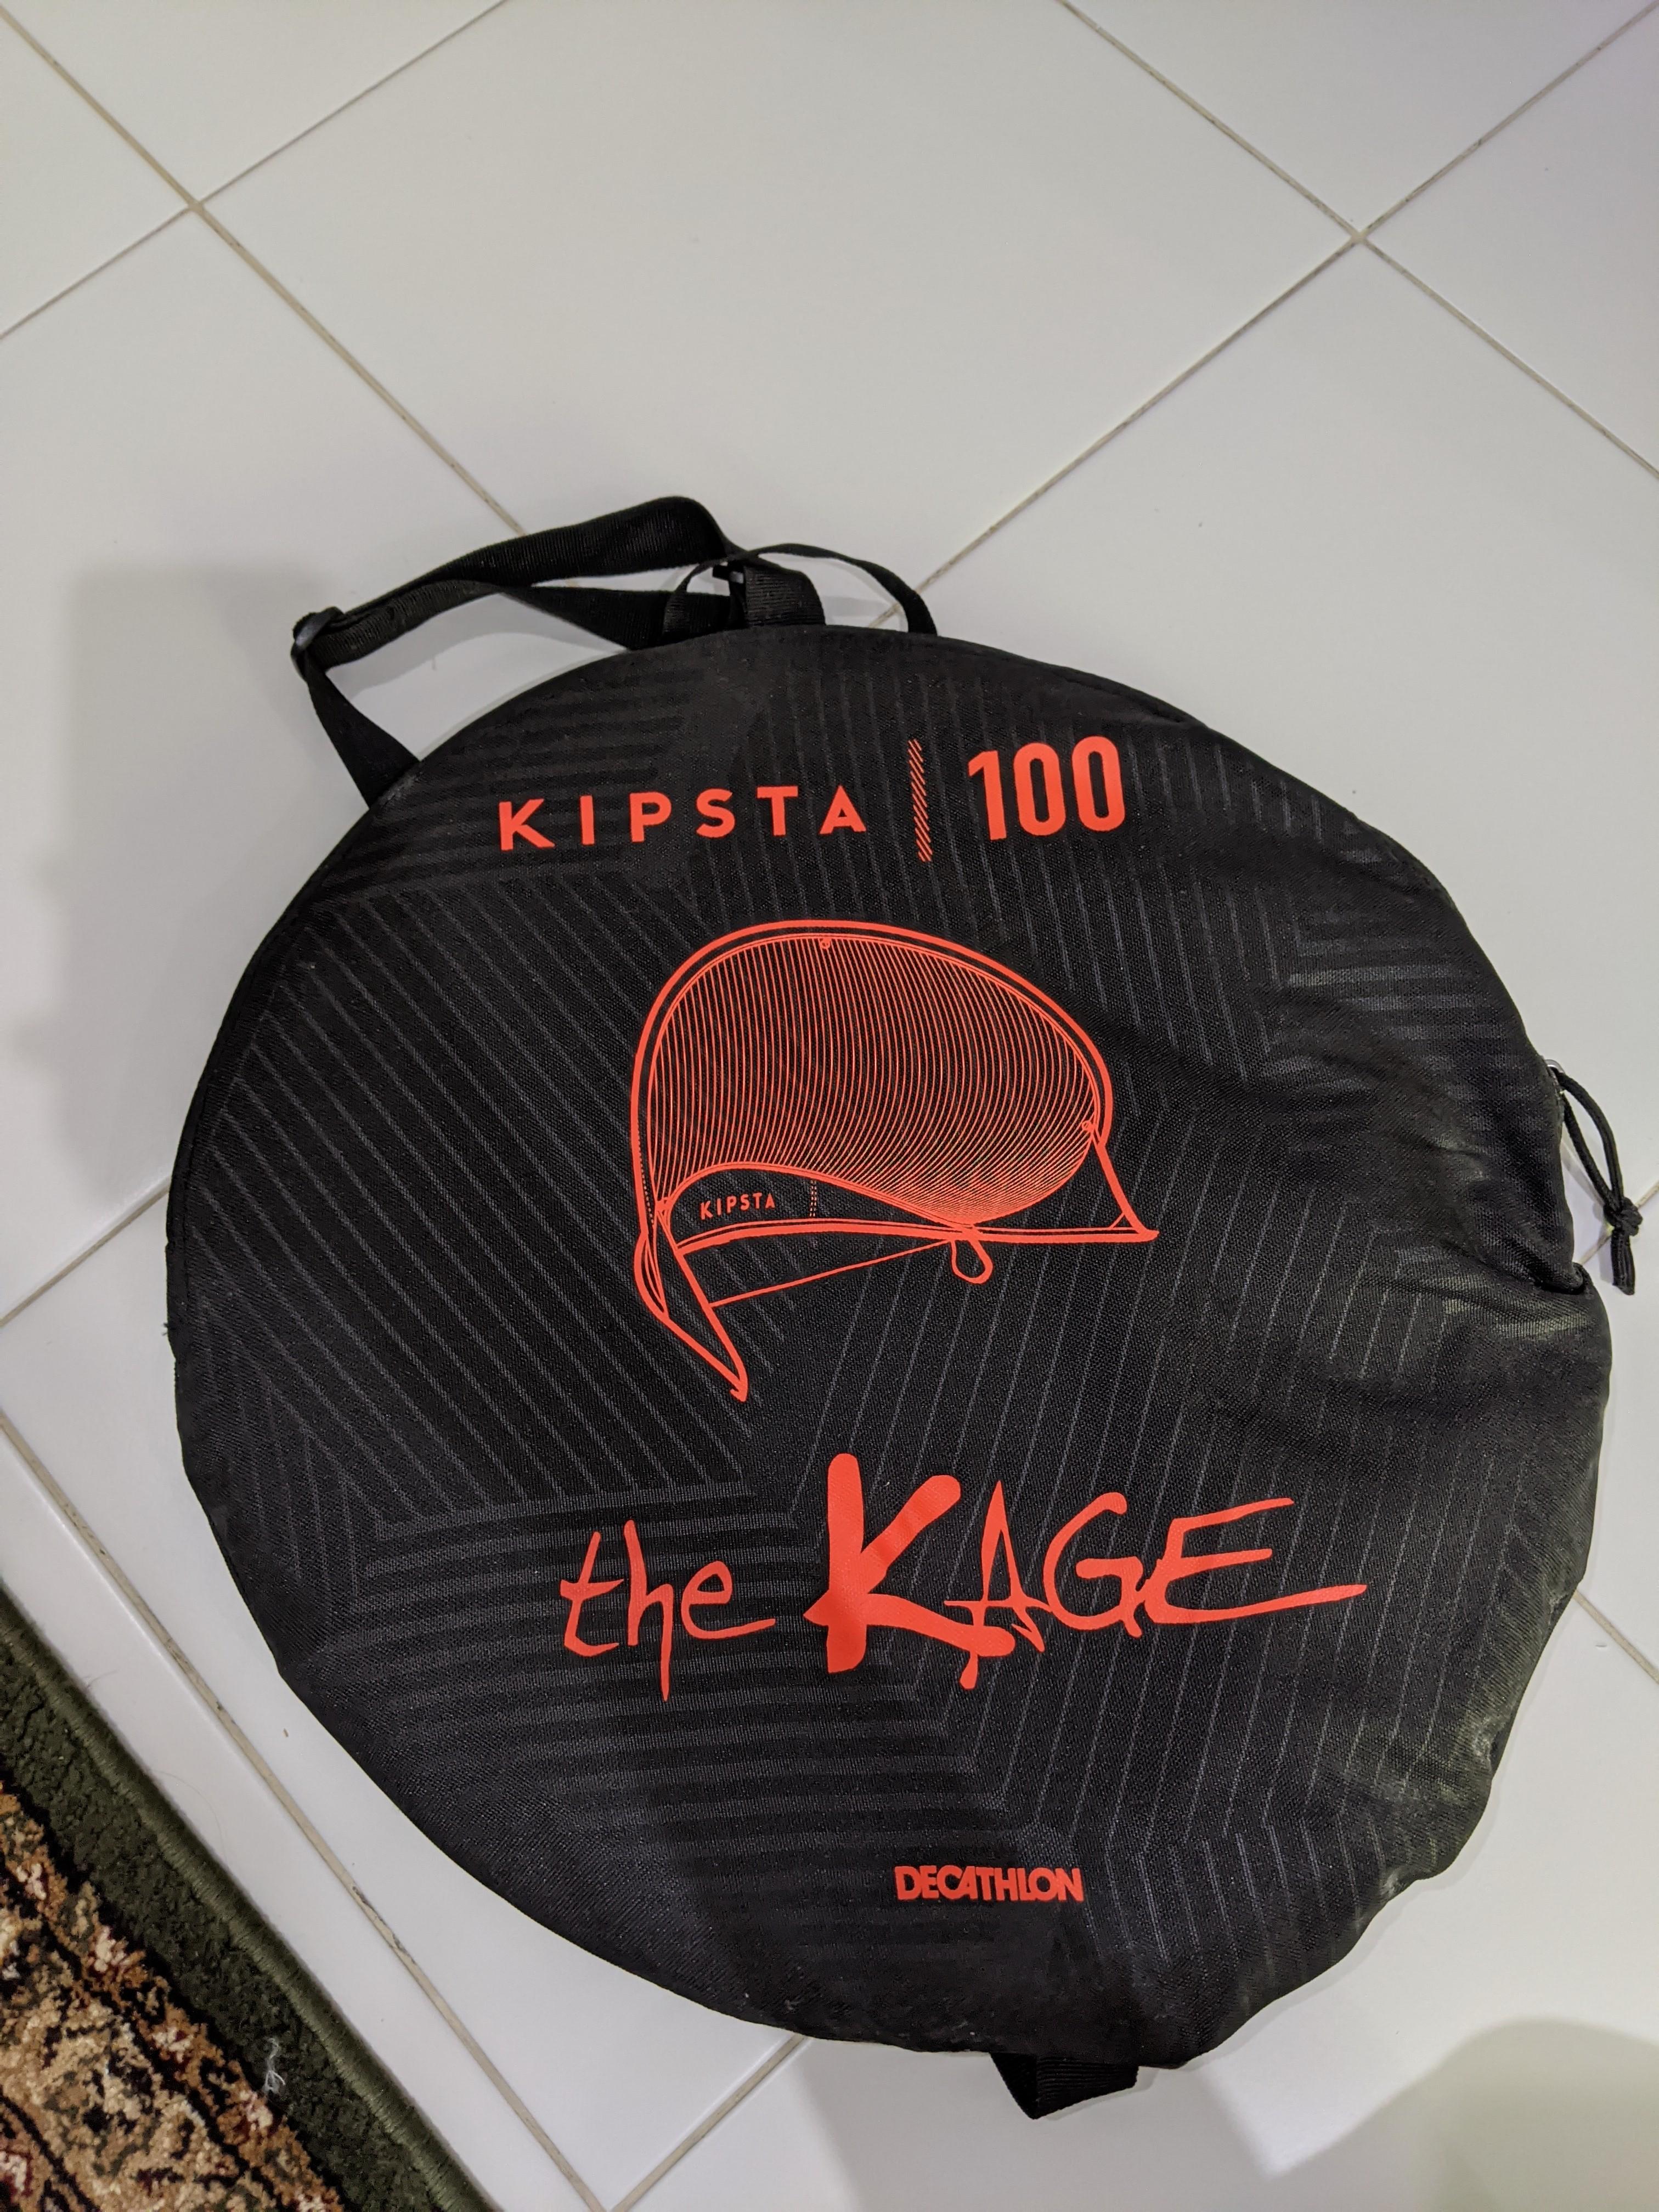 kipsta 100 the kage